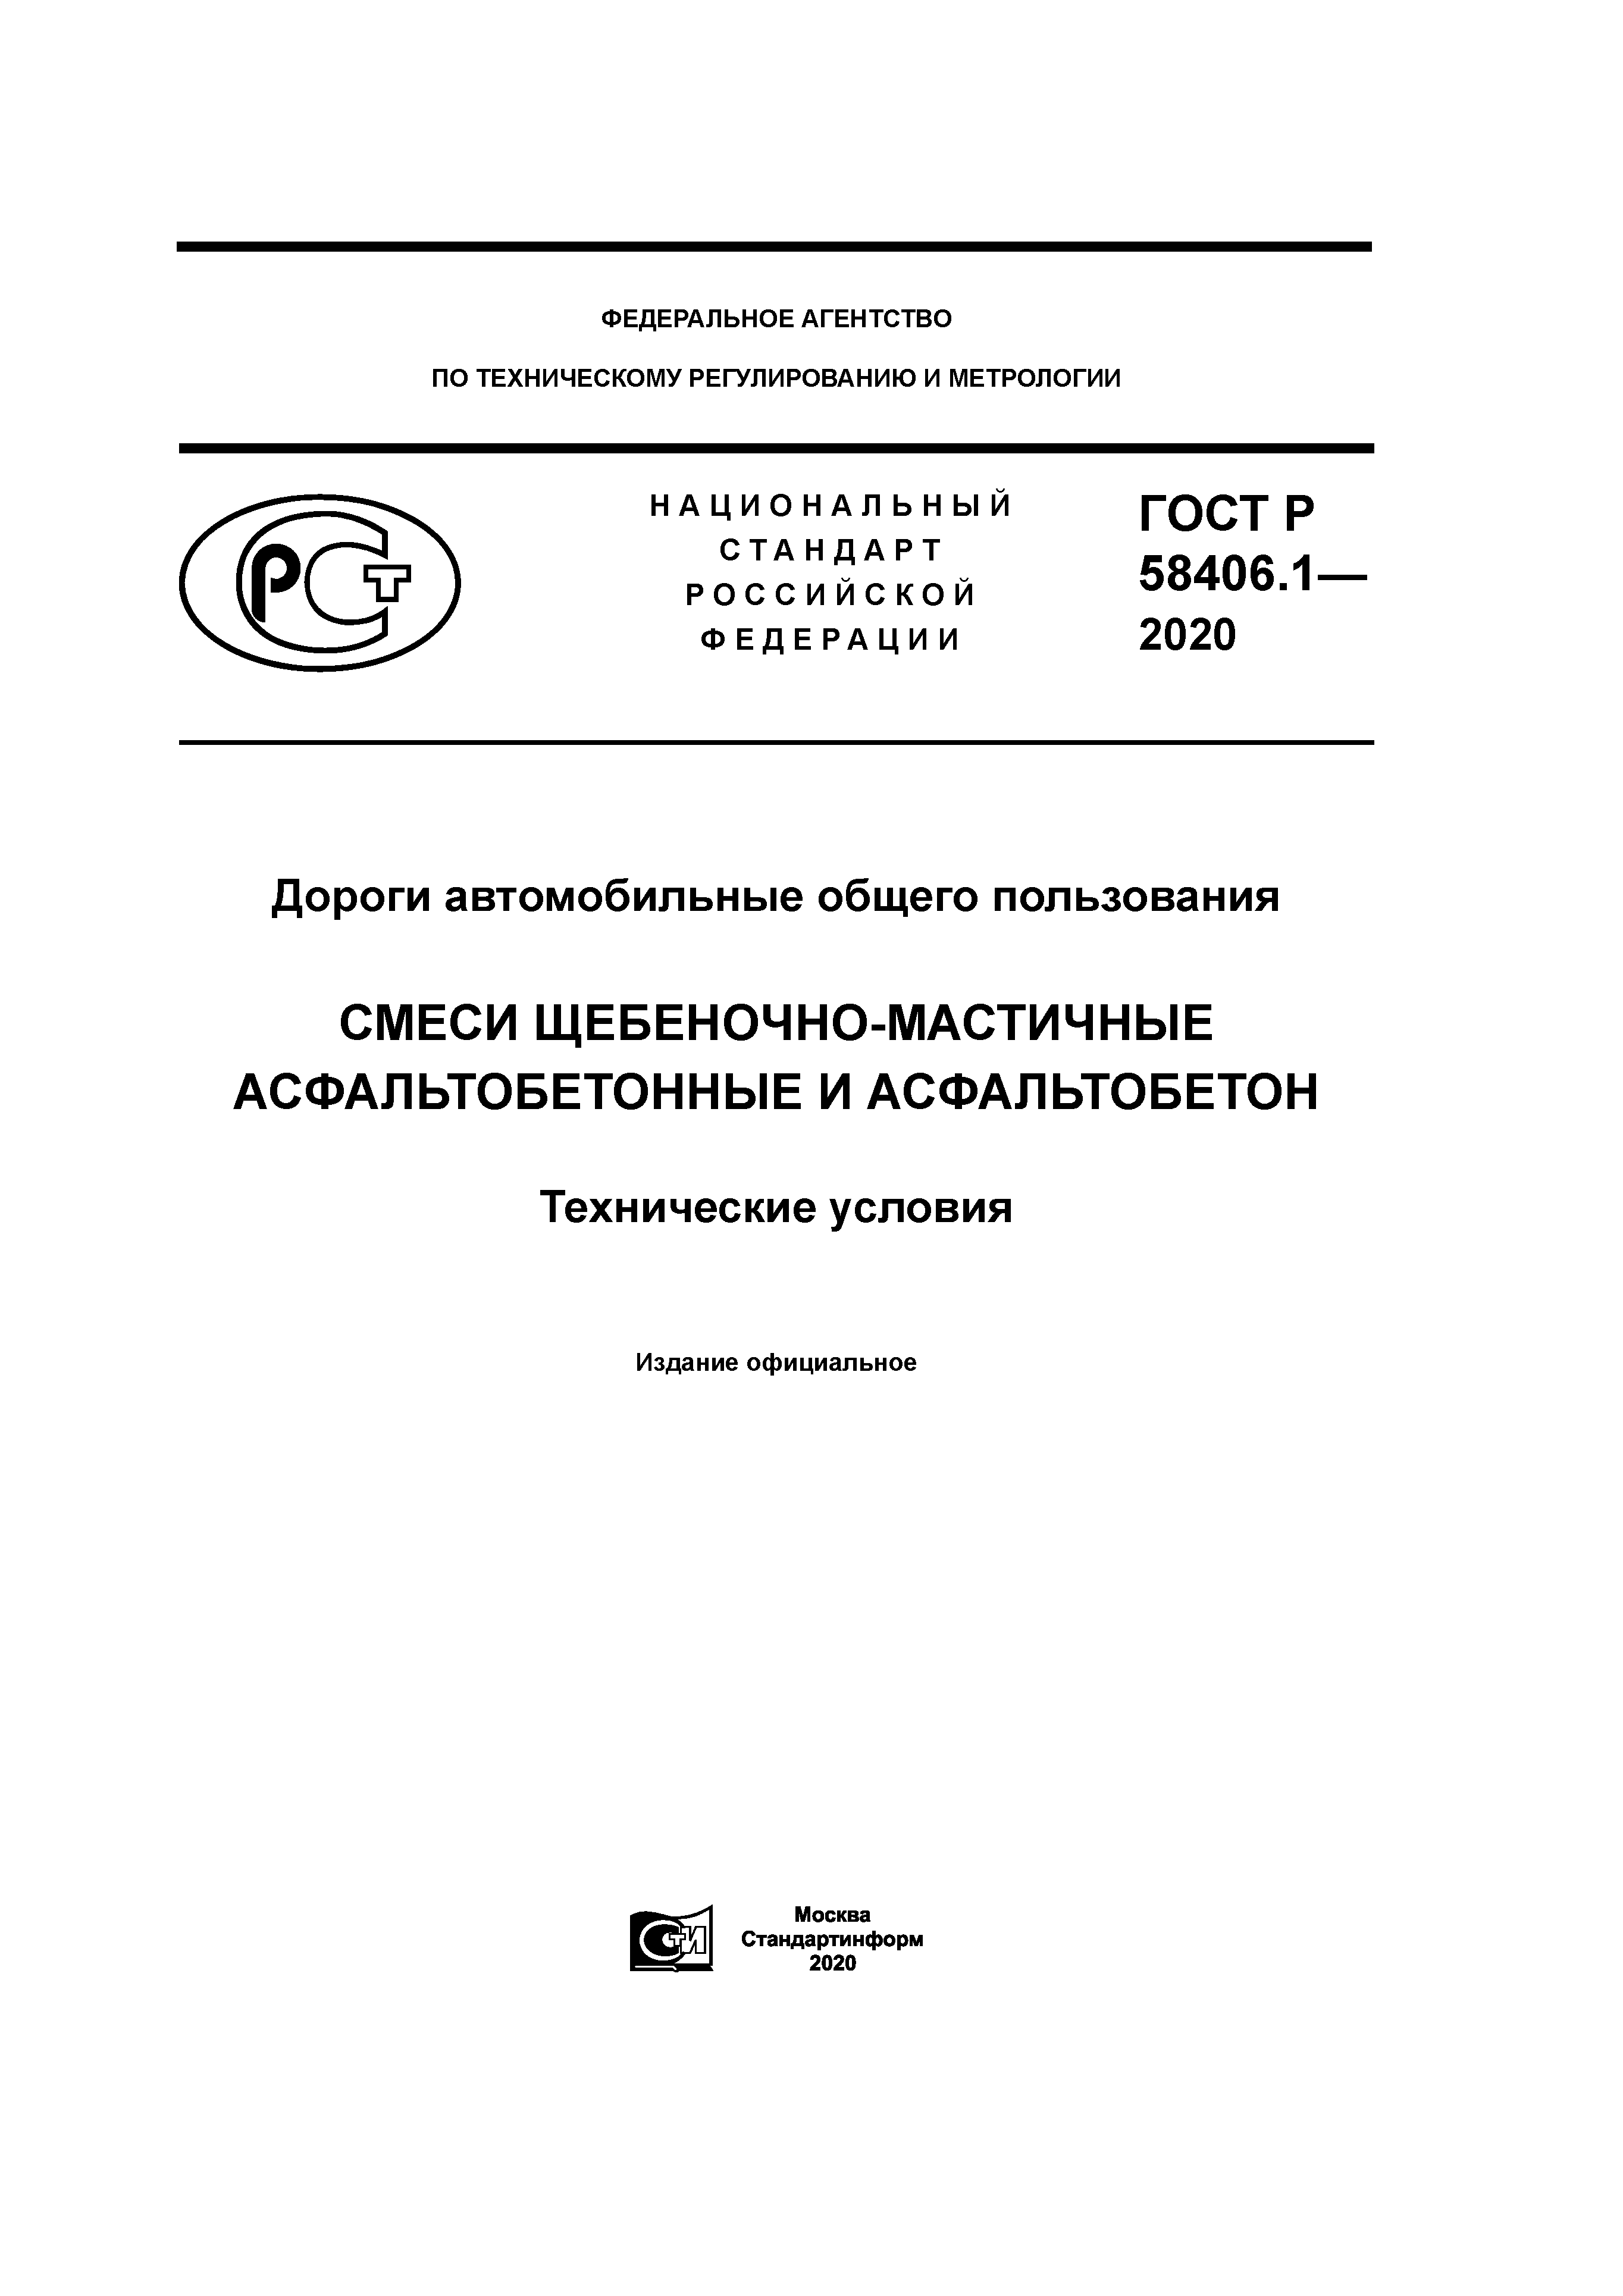 ГОСТ Р 58406.1-2020